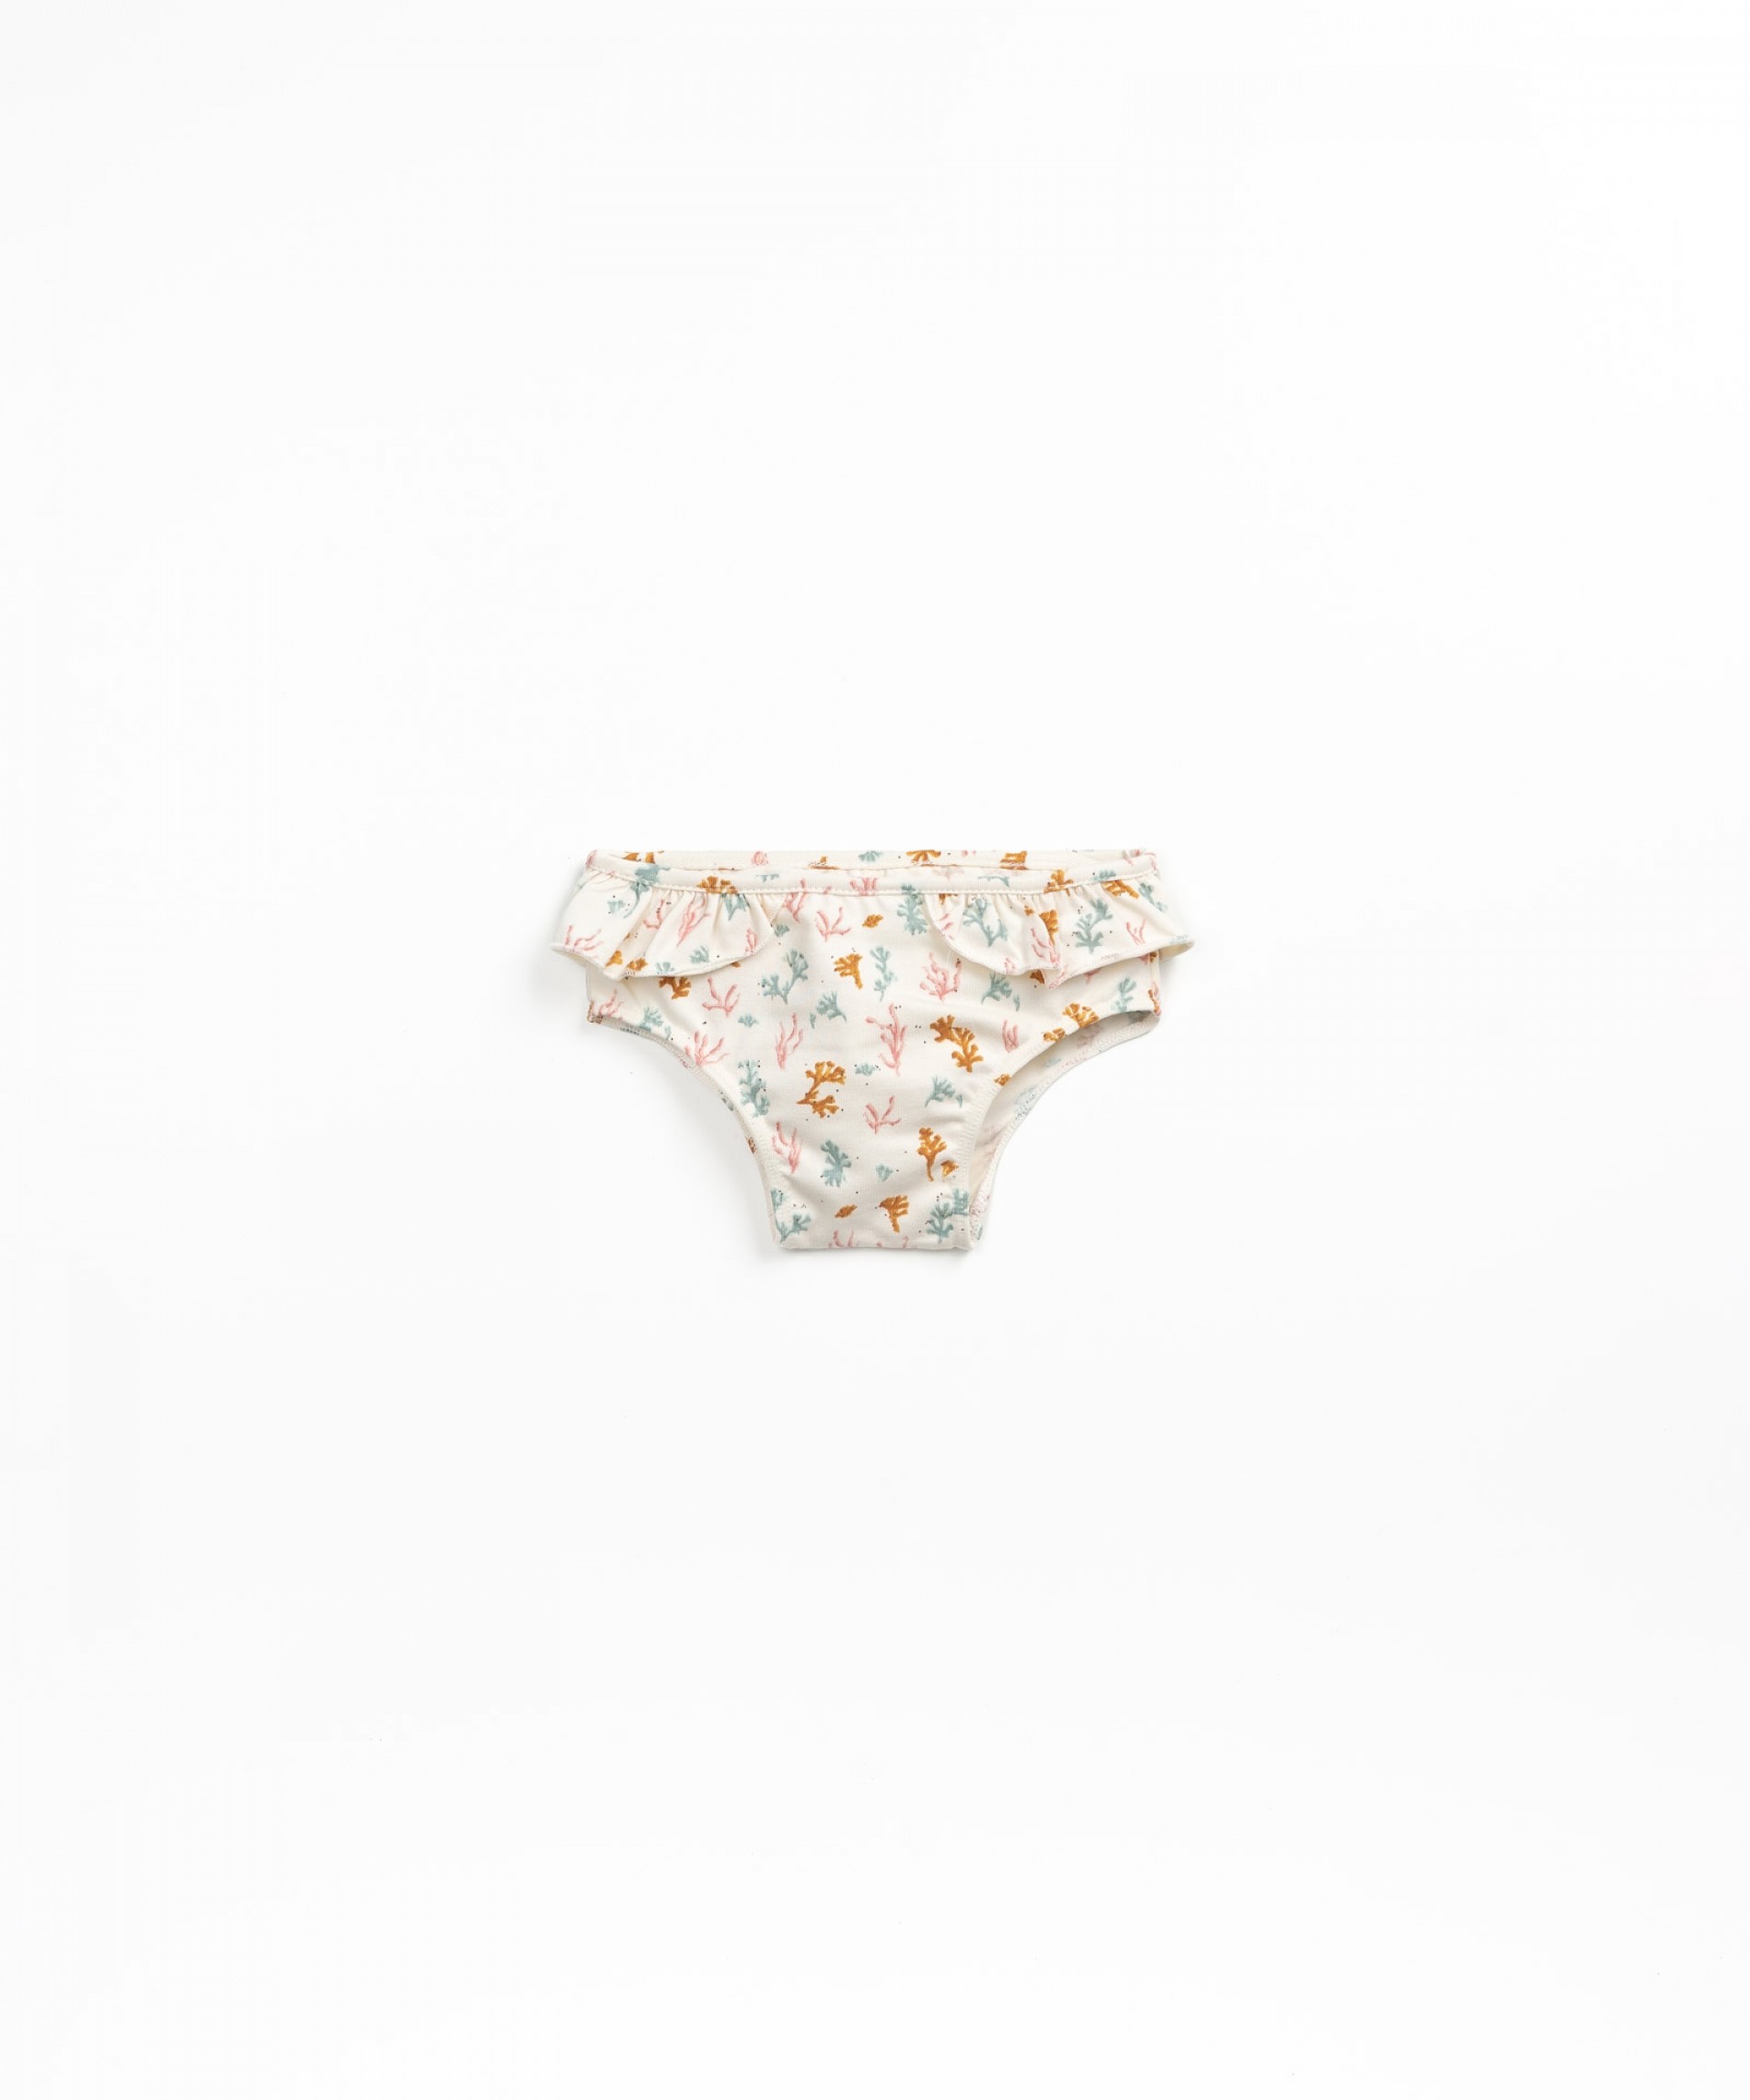 Swimming shorts in organic cotton | Textile Art